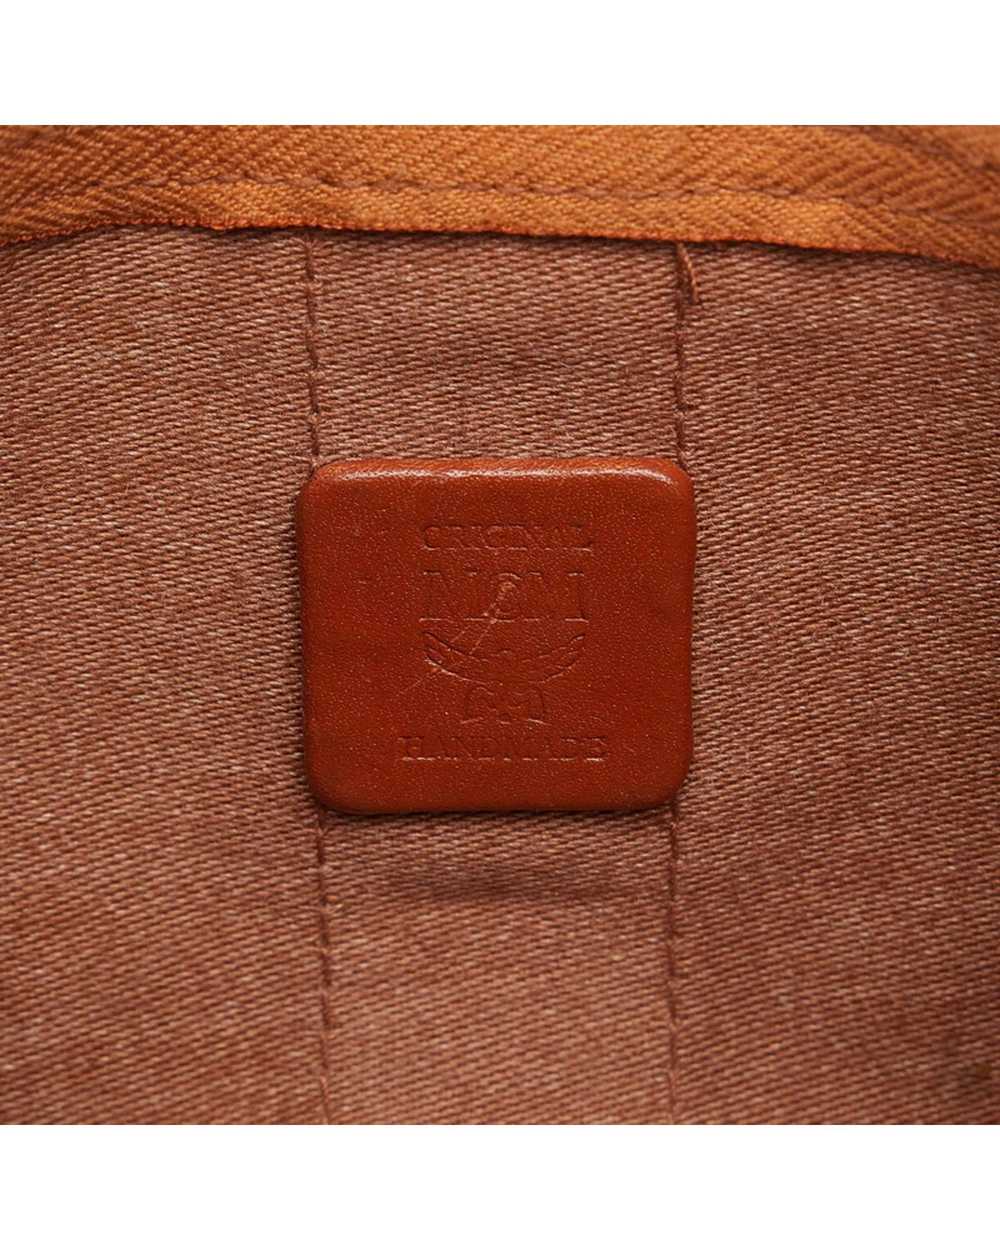 MCM Brown Leather Fanny Pack/Sling Bag - image 7